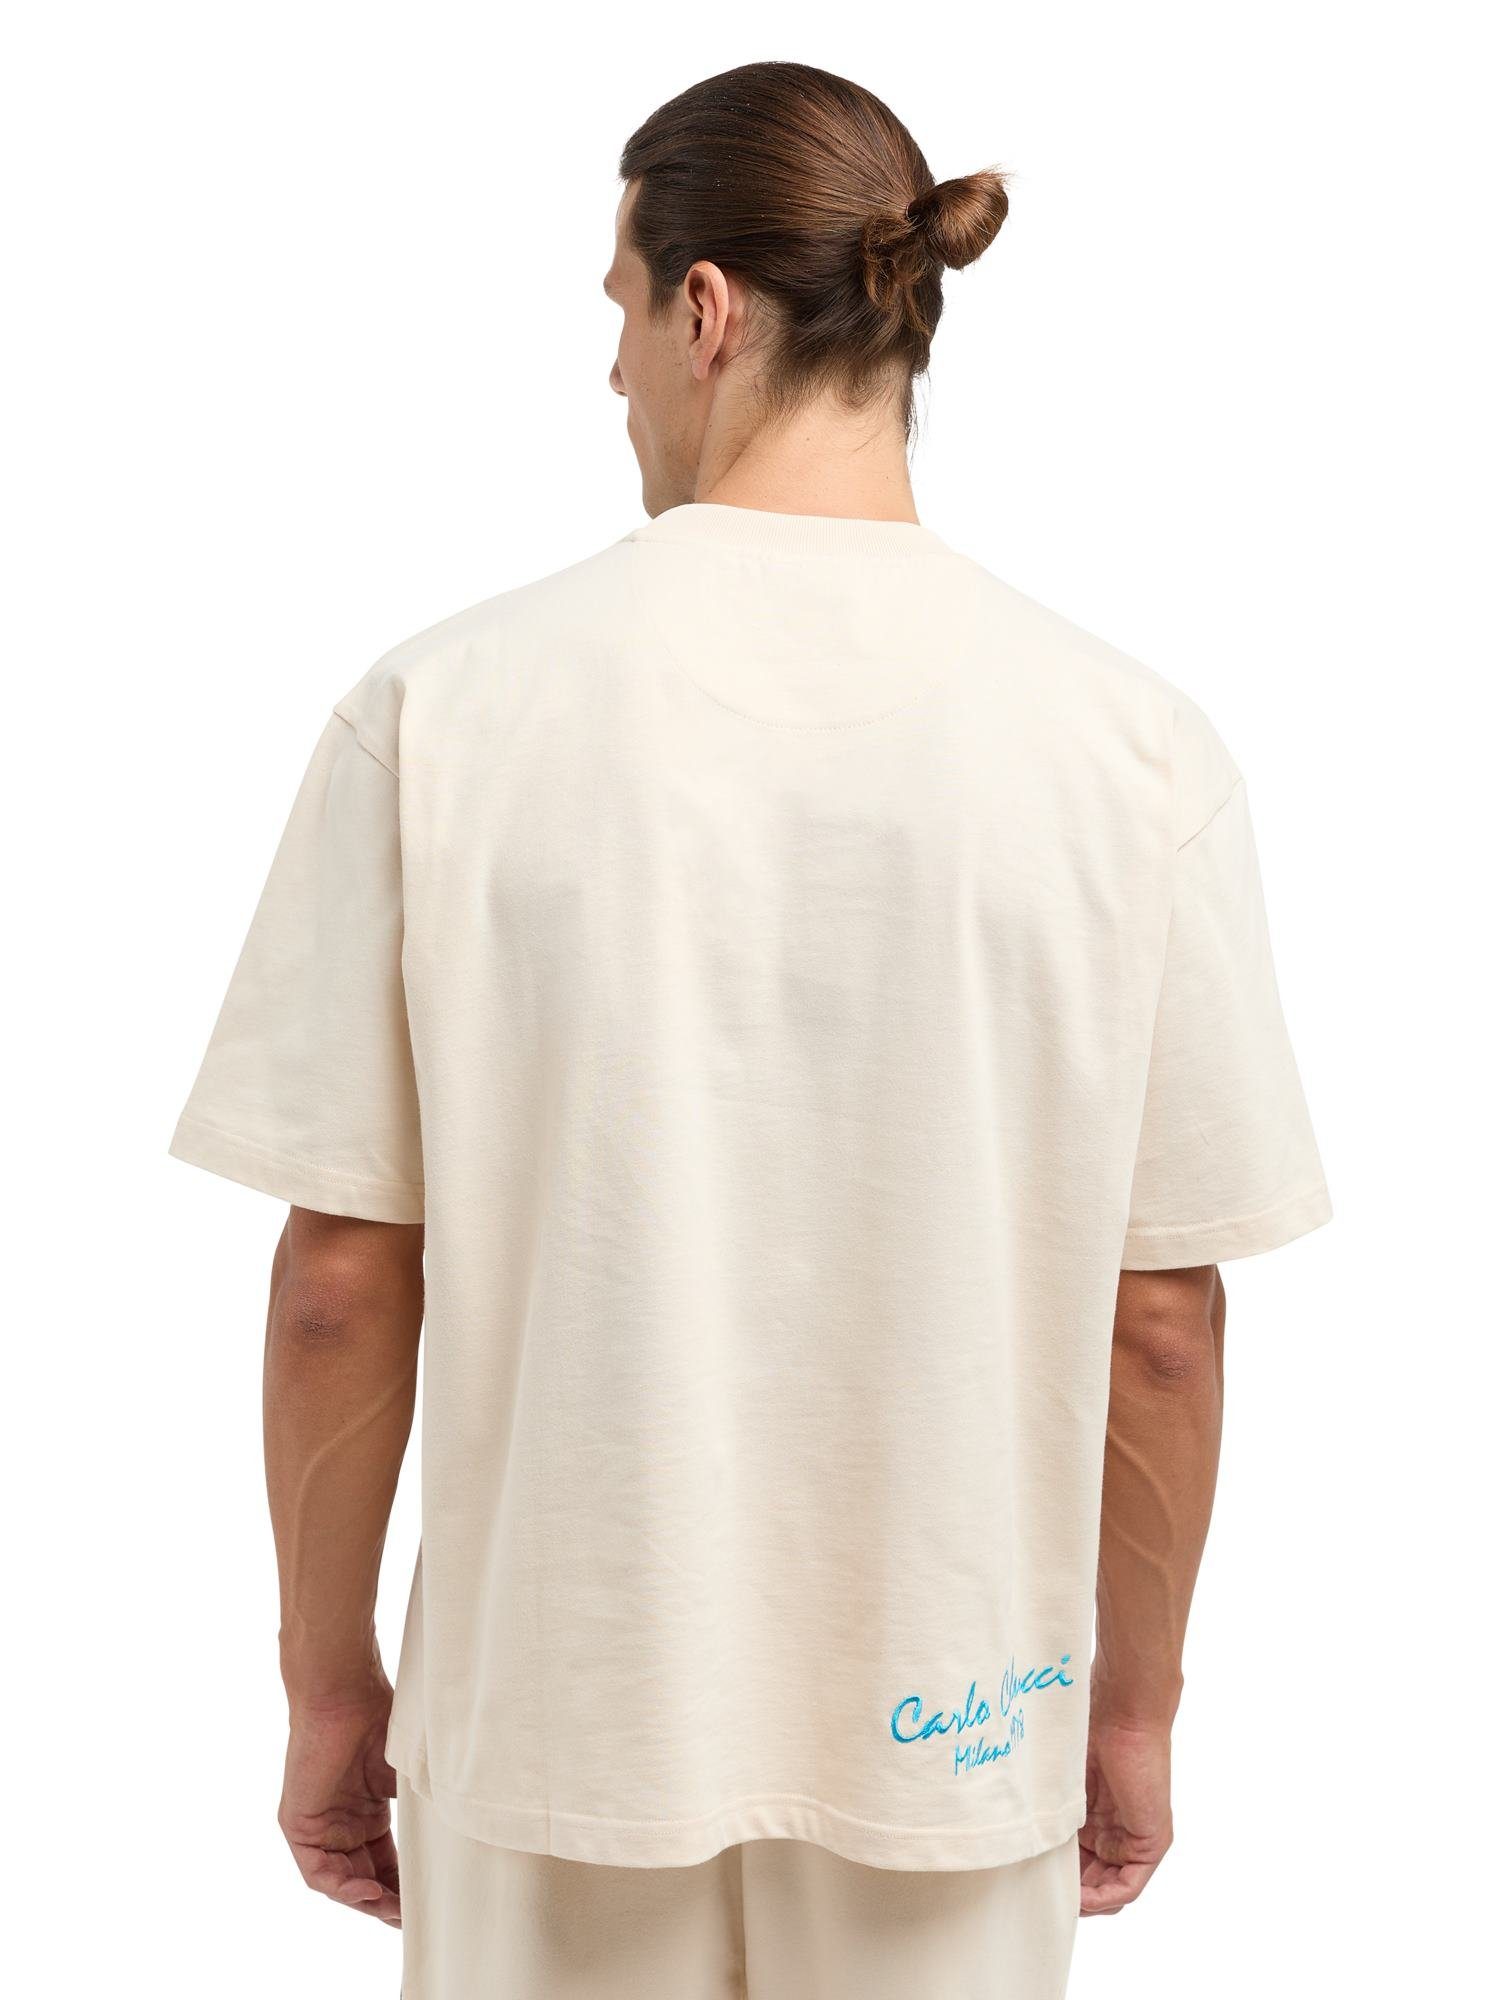 CARLO COLUCCI Tommaso T-Shirt Mehrfarbig Weiß De 